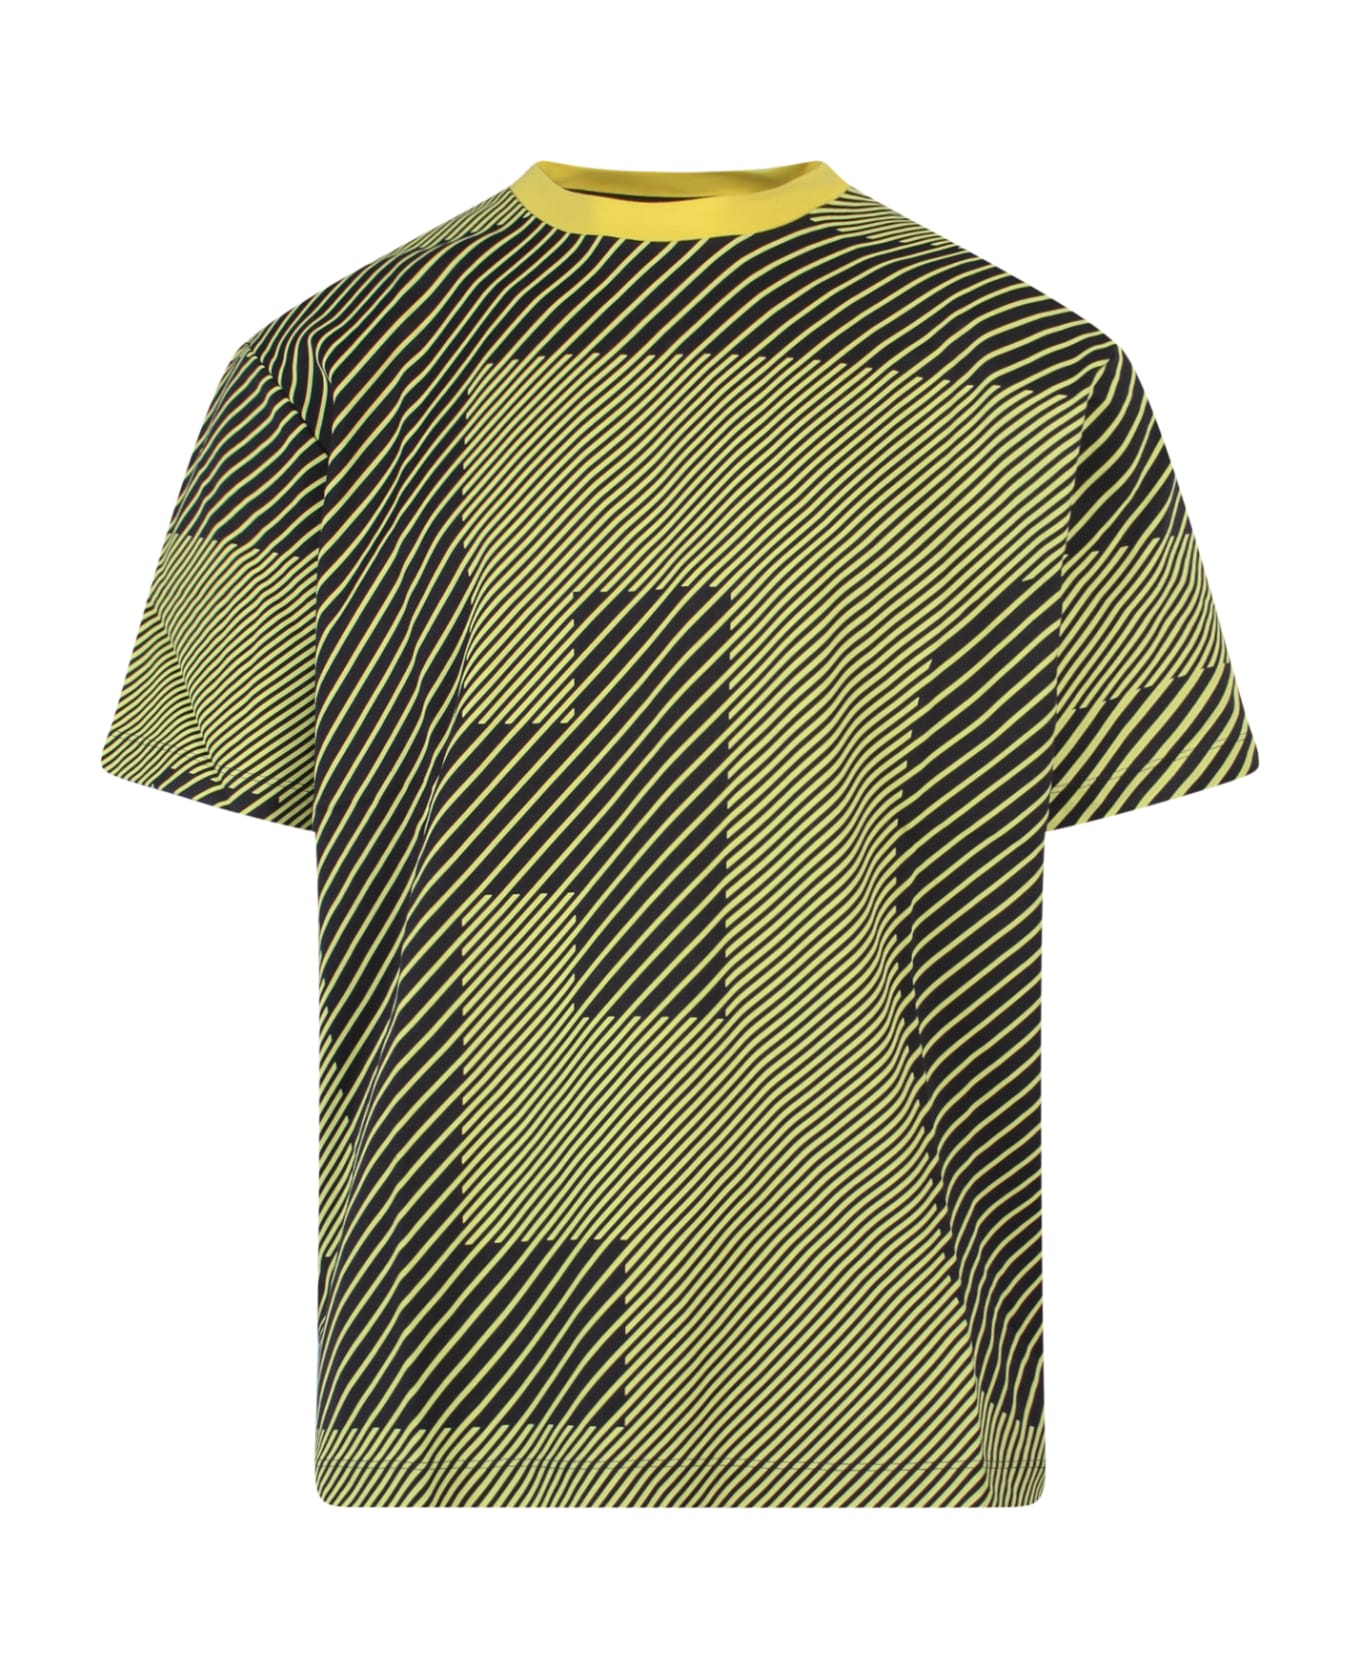 Ferrari T-shirt - Yellow シャツ